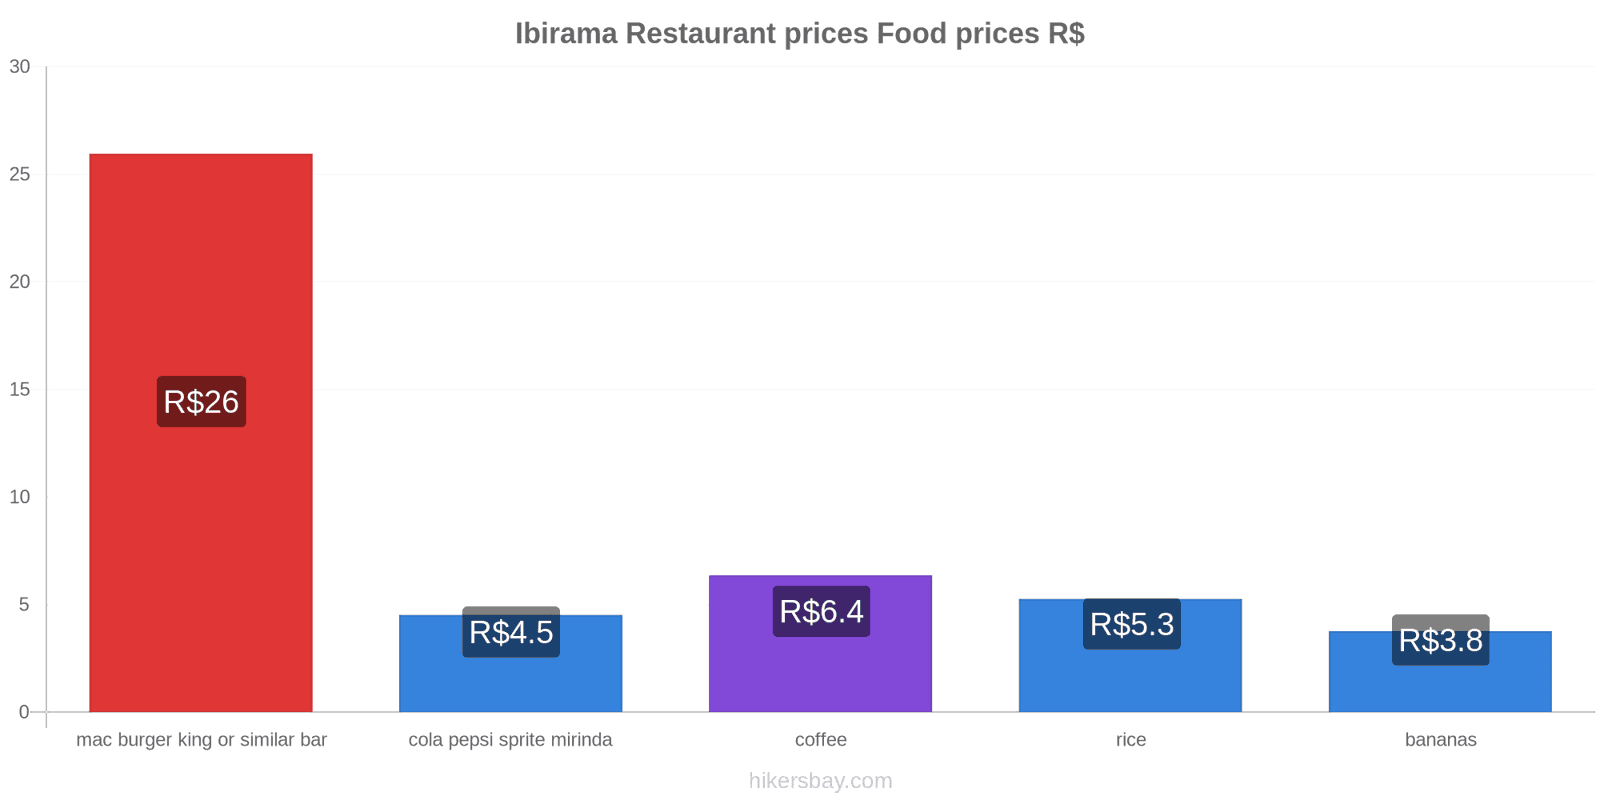 Ibirama price changes hikersbay.com